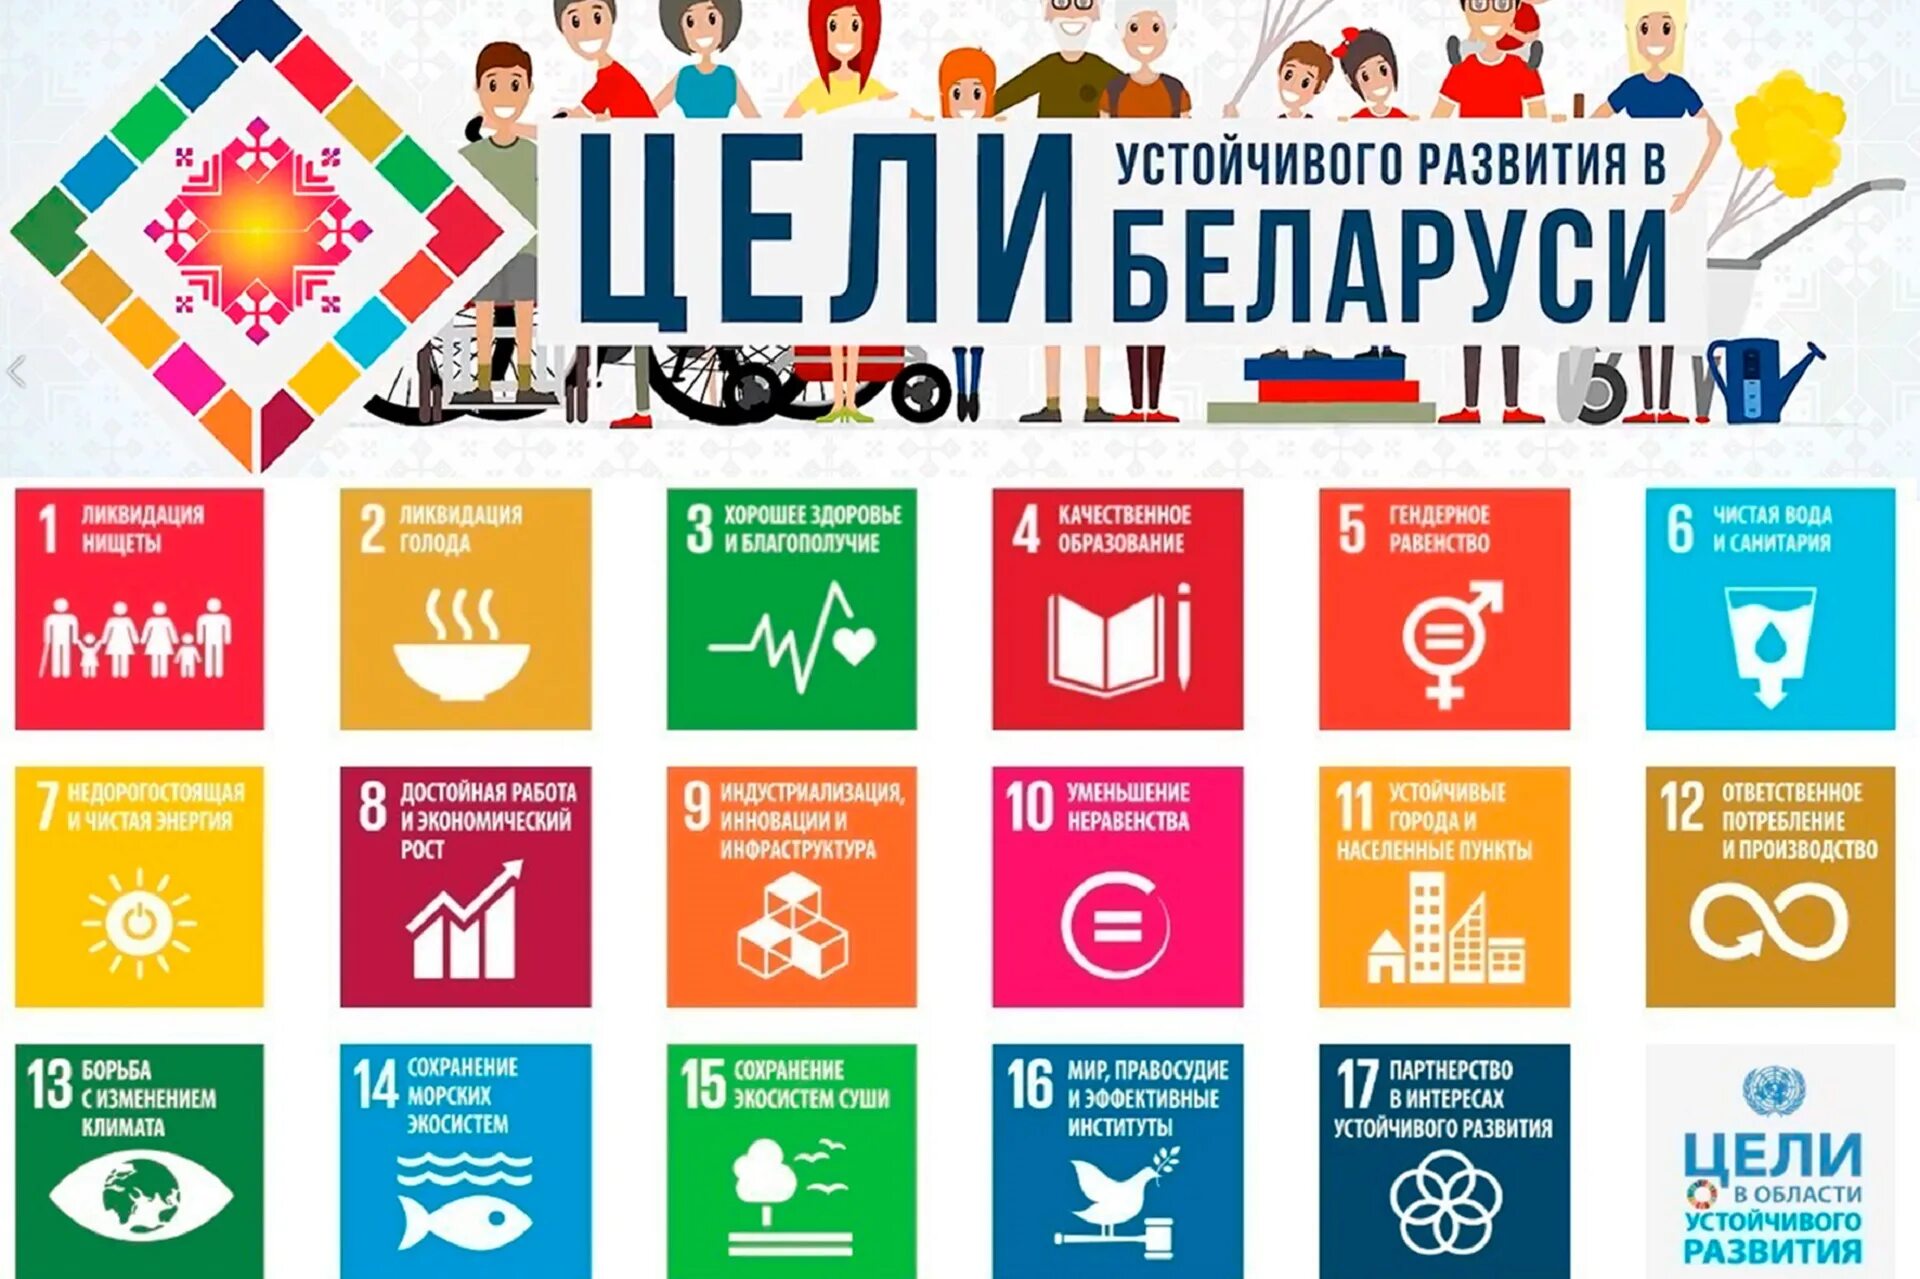 Цели оон 2015. 17 Целей устойчивого развития ООН. Цели устойчивого развития ООН 2015-2030. Цели устойчивого развития на период до 2030 года Беларусь. Цели устойчивого развития ООН до 2030.